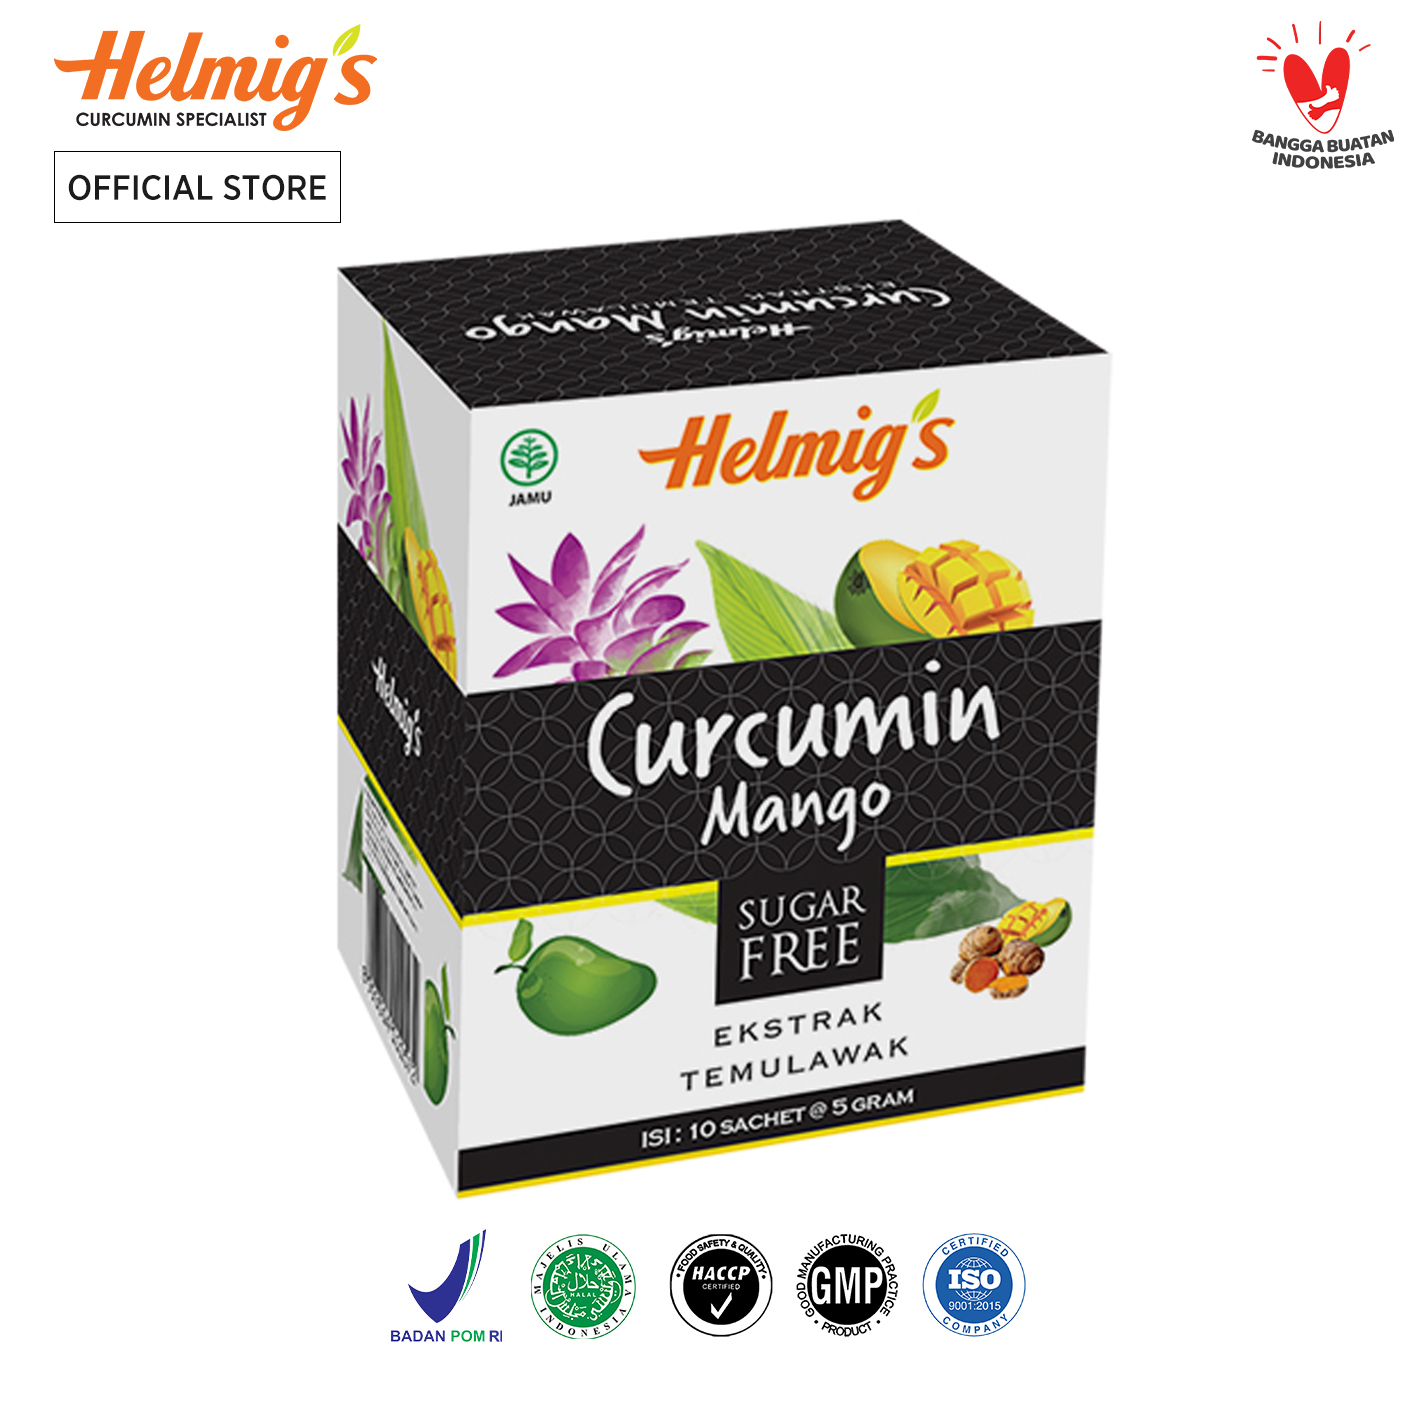 Helmig’s Curcumin Sugar Free Mango